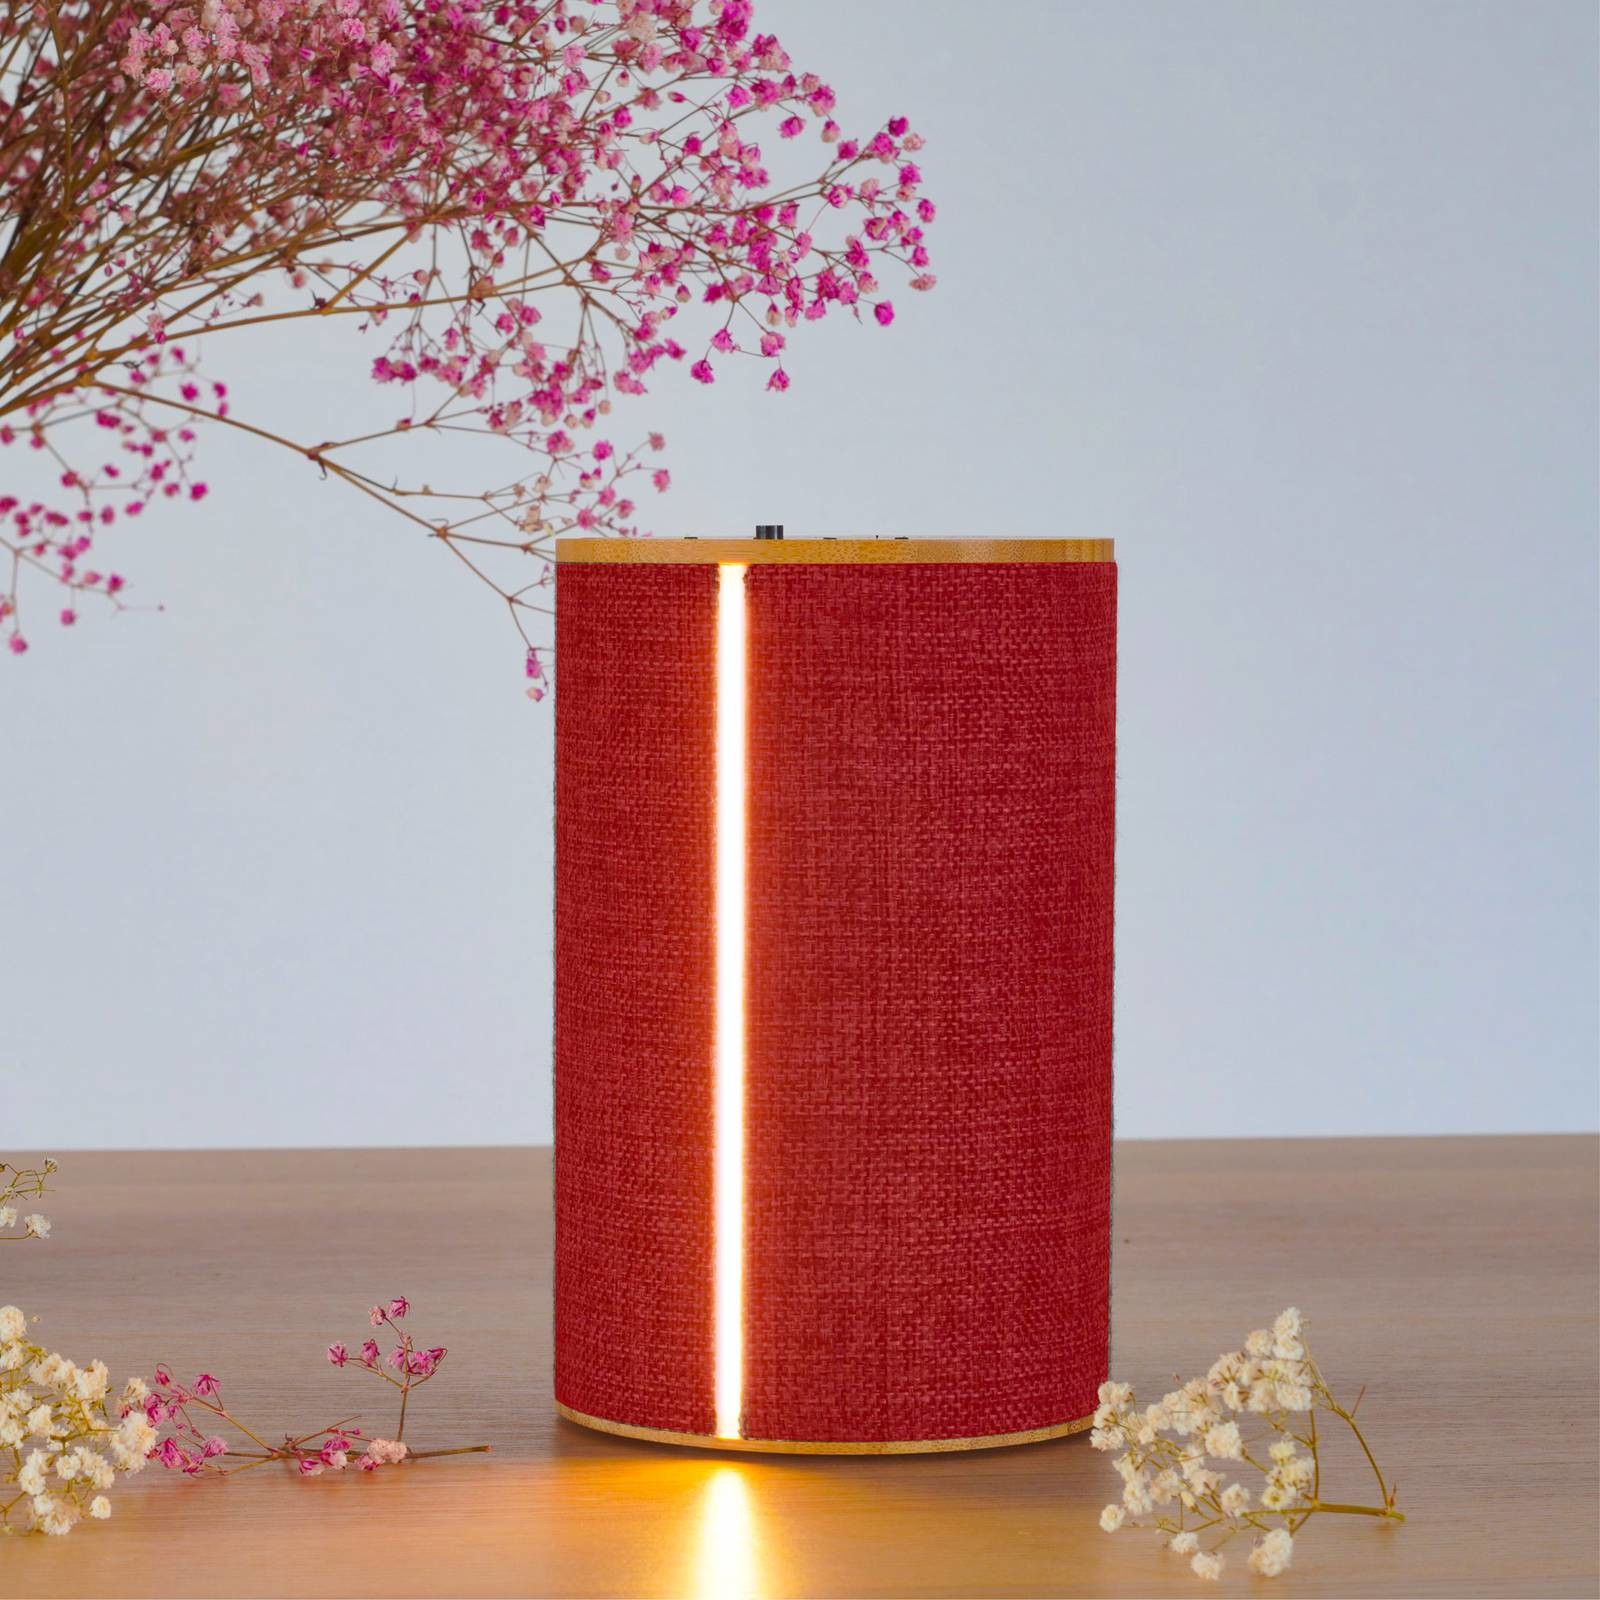 LOOM DESIGN LOOM DESIGN Silo 2 dekoracyjna BT-speaker czerwona